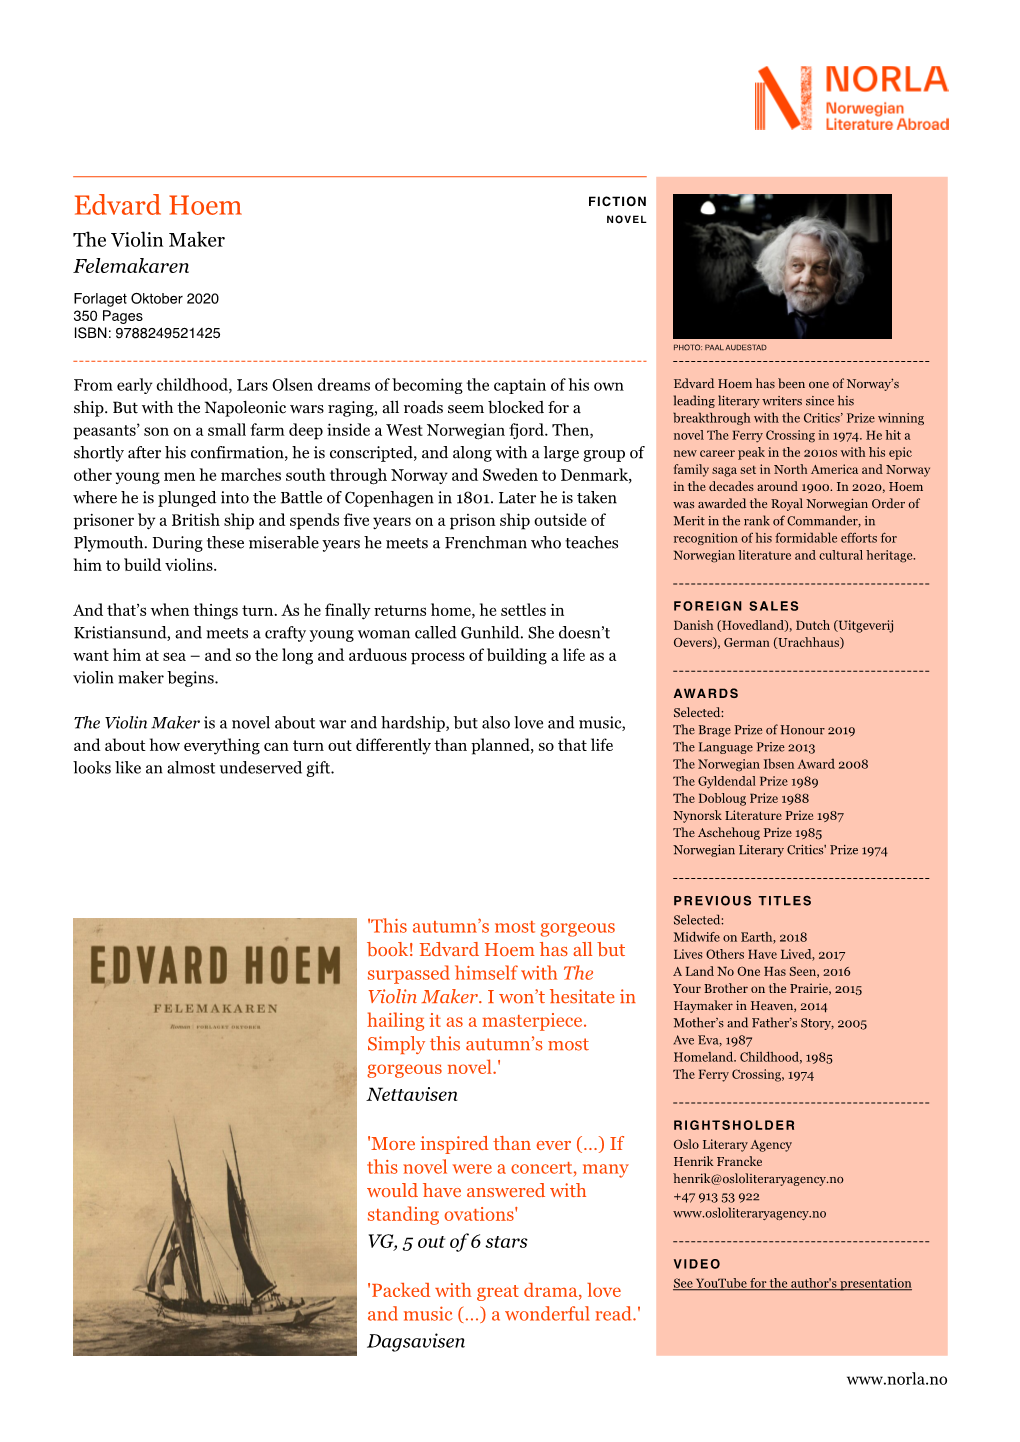 Edvard Hoem NOVEL the Violin Maker Felemakaren Forlaget Oktober 2020 350 Pages ISBN: 9788249521425 PHOTO: PAAL AUDESTAD